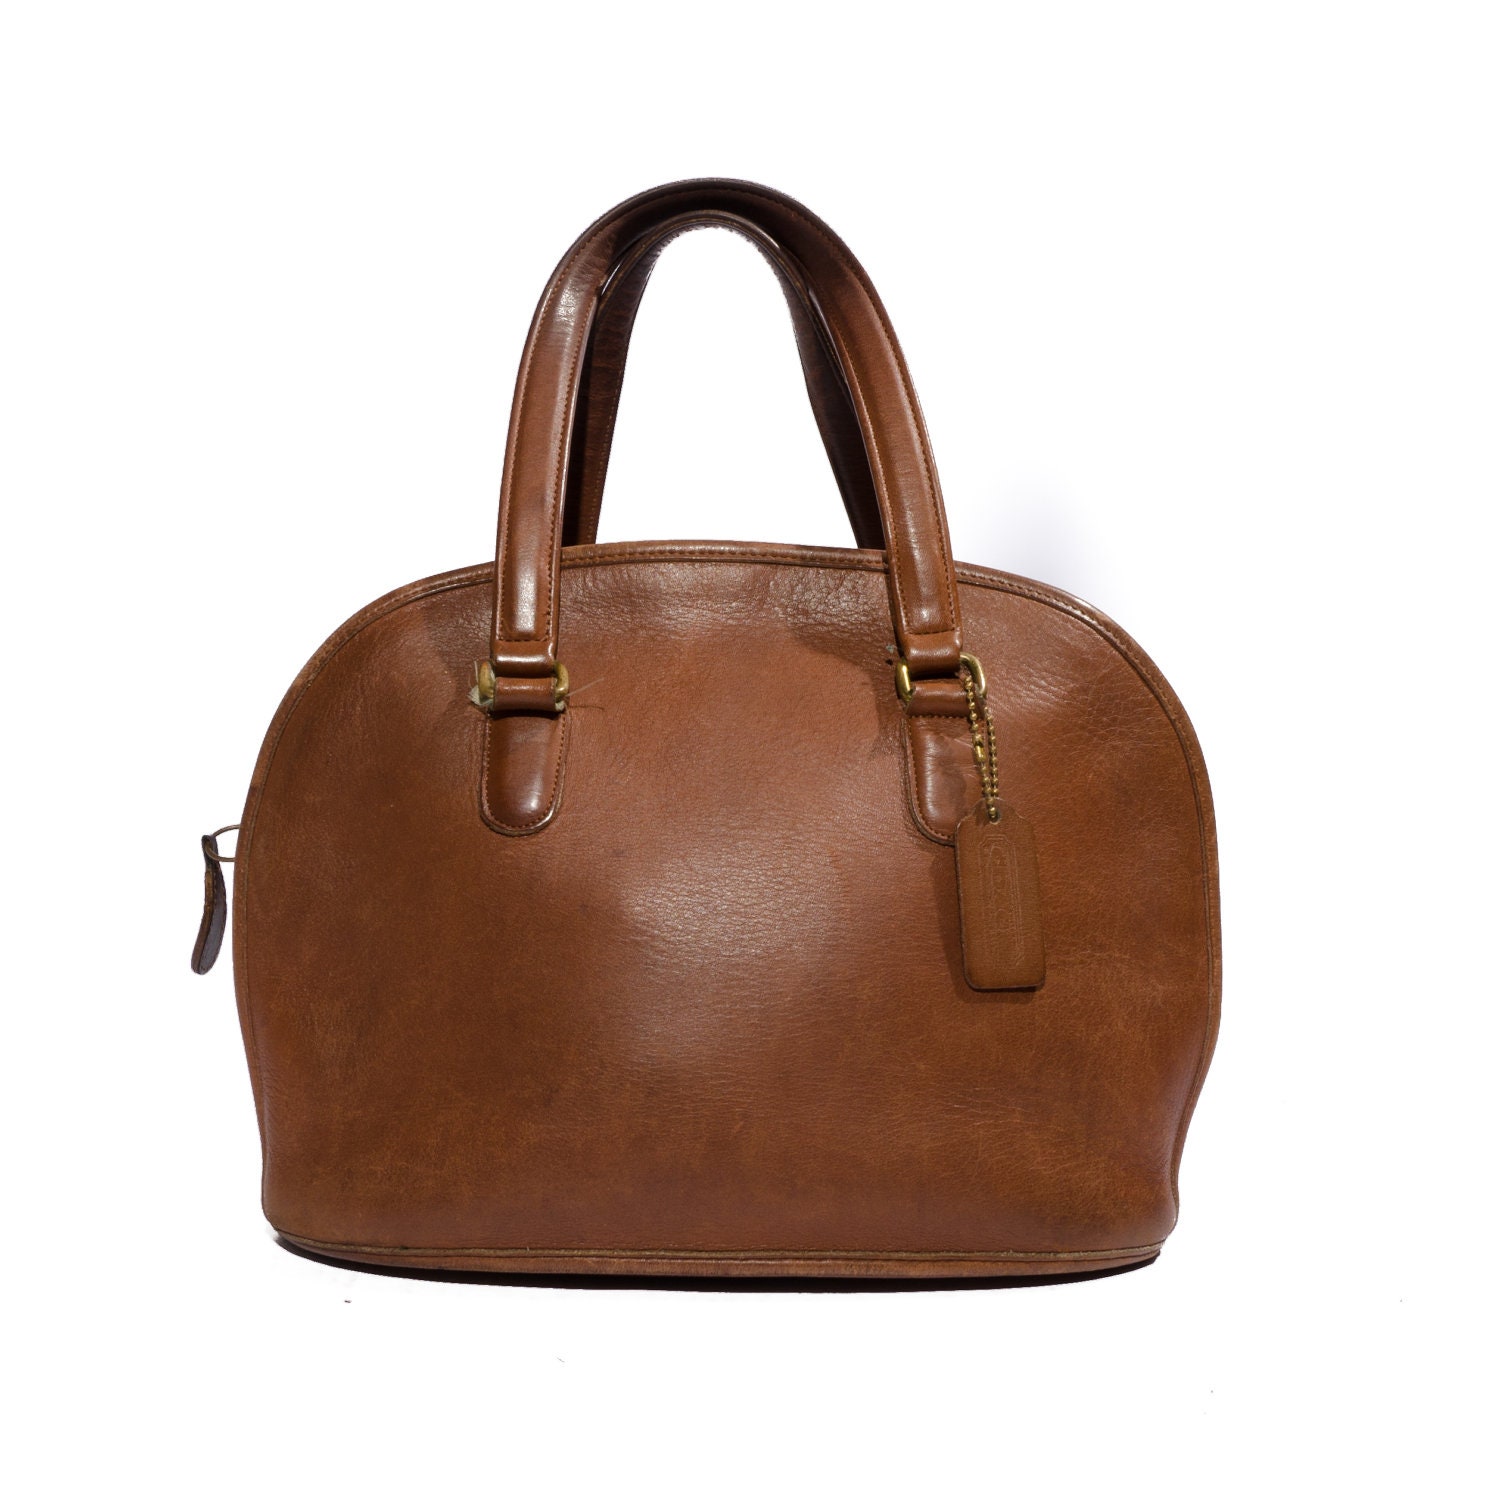 Vintage COACH Handbag / Satchel Brown Leather Bag / Tote